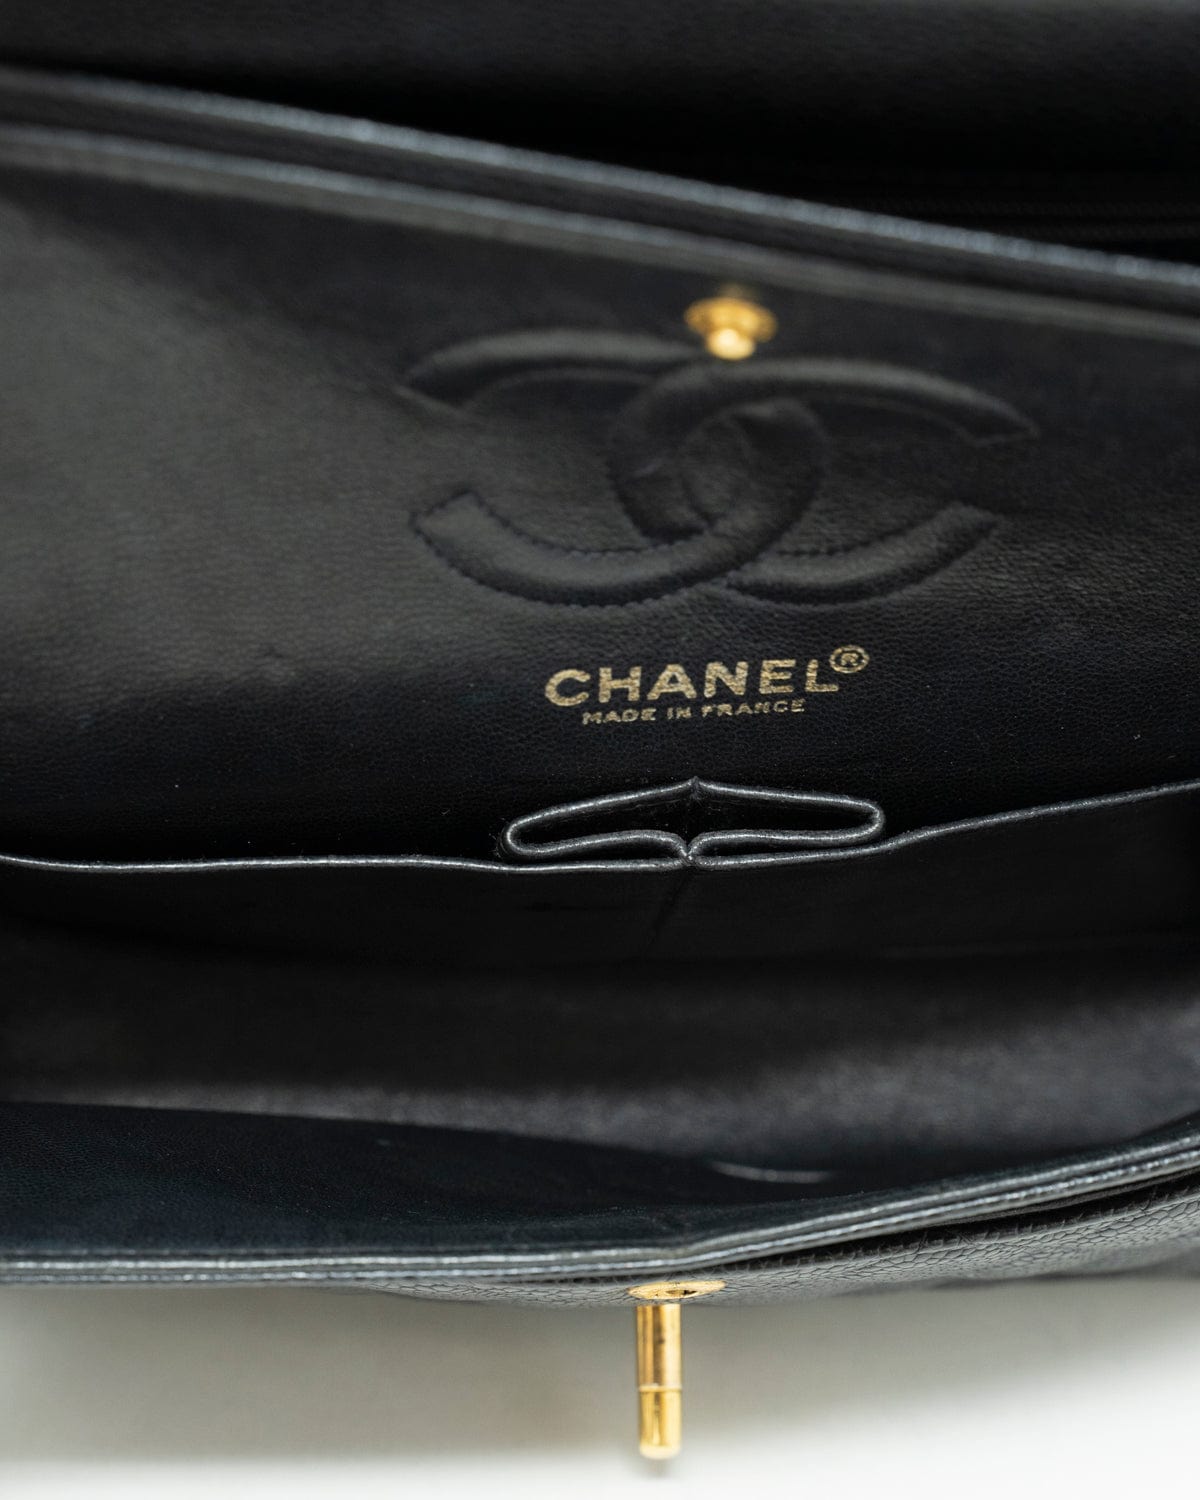 Chanel Chanel Small Black Caviar Flap bag ASL2352